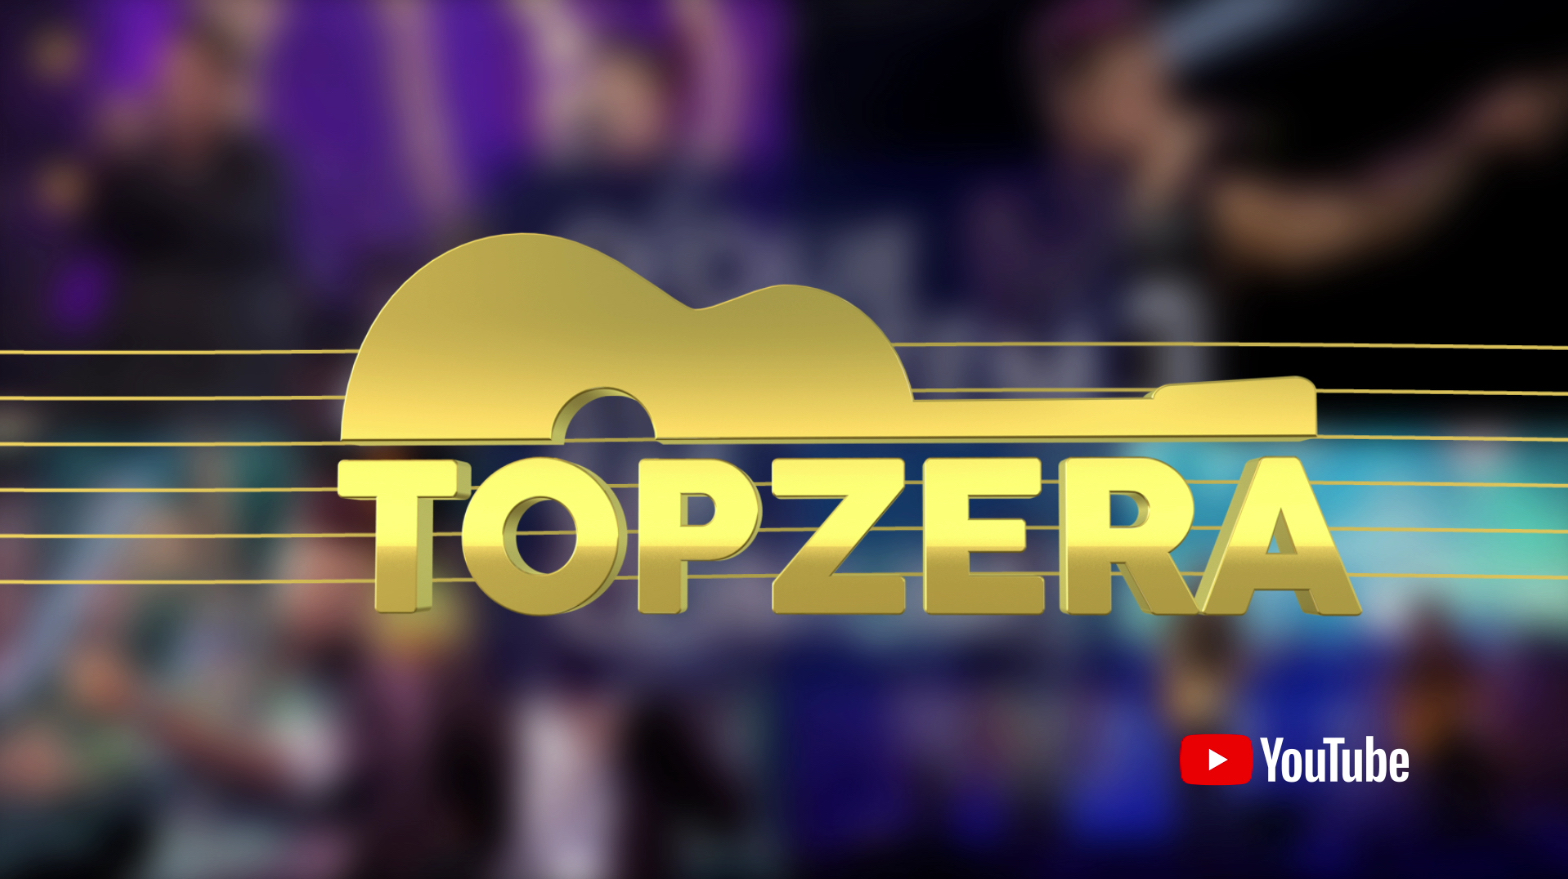 Topzera - Topzera updated their cover photo.